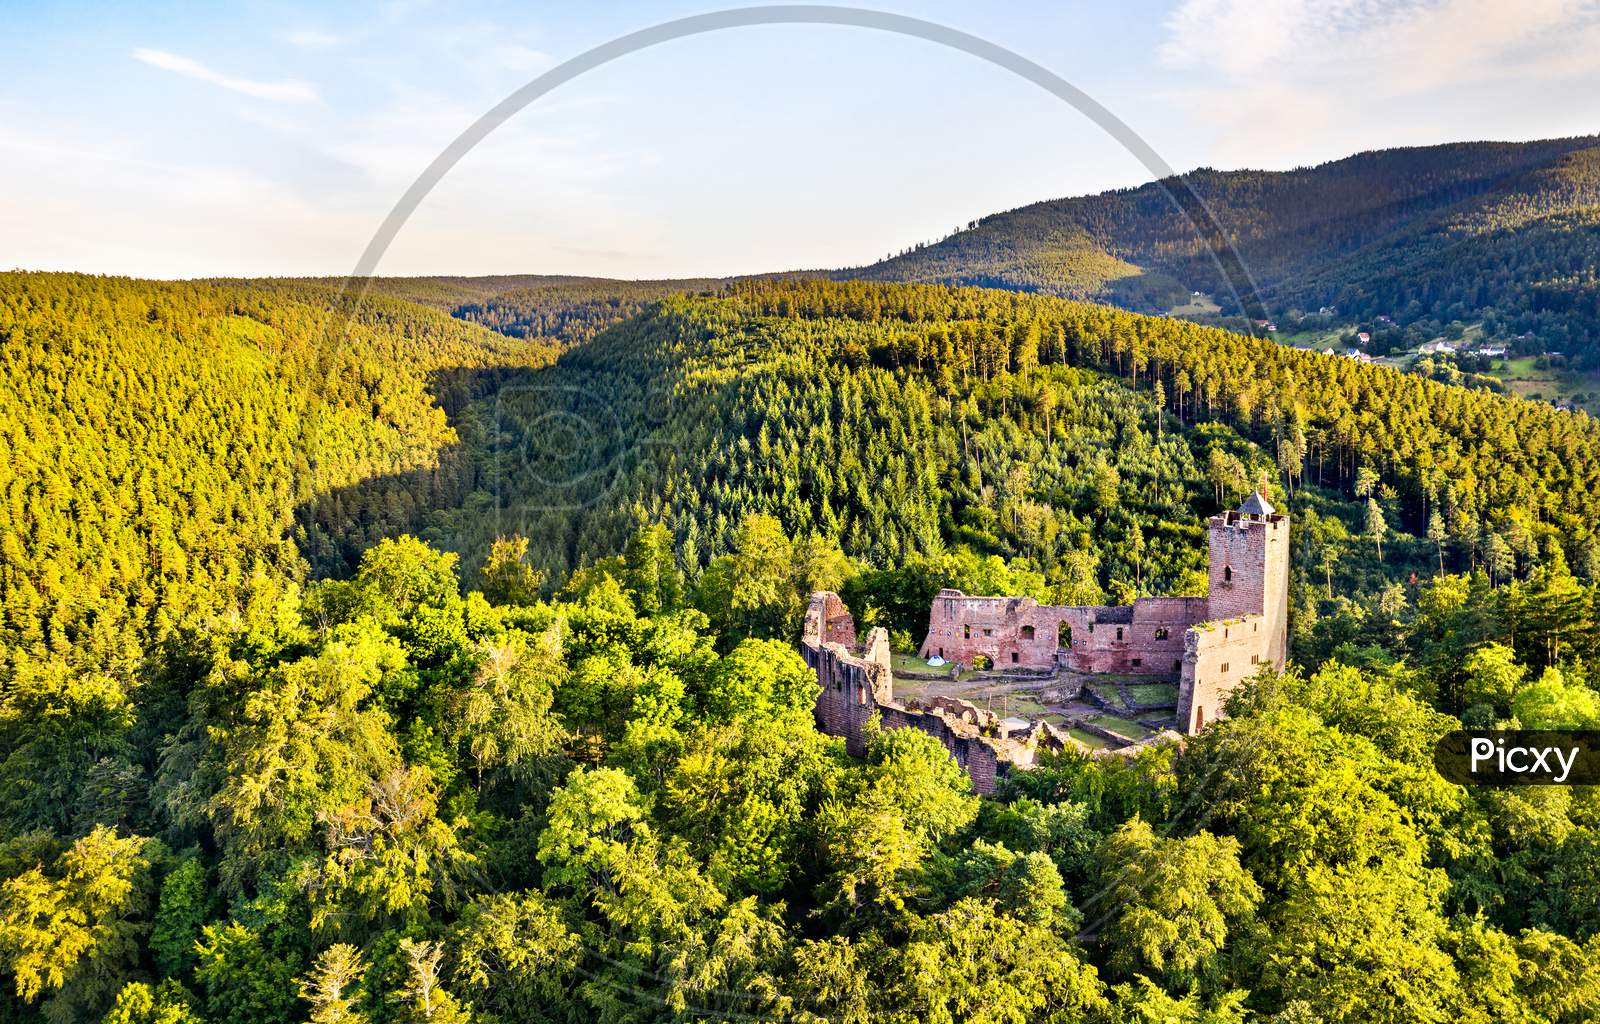 Wangenbourg Castlein The Vosges Mountains - Bas-Rhin, Alsace, France